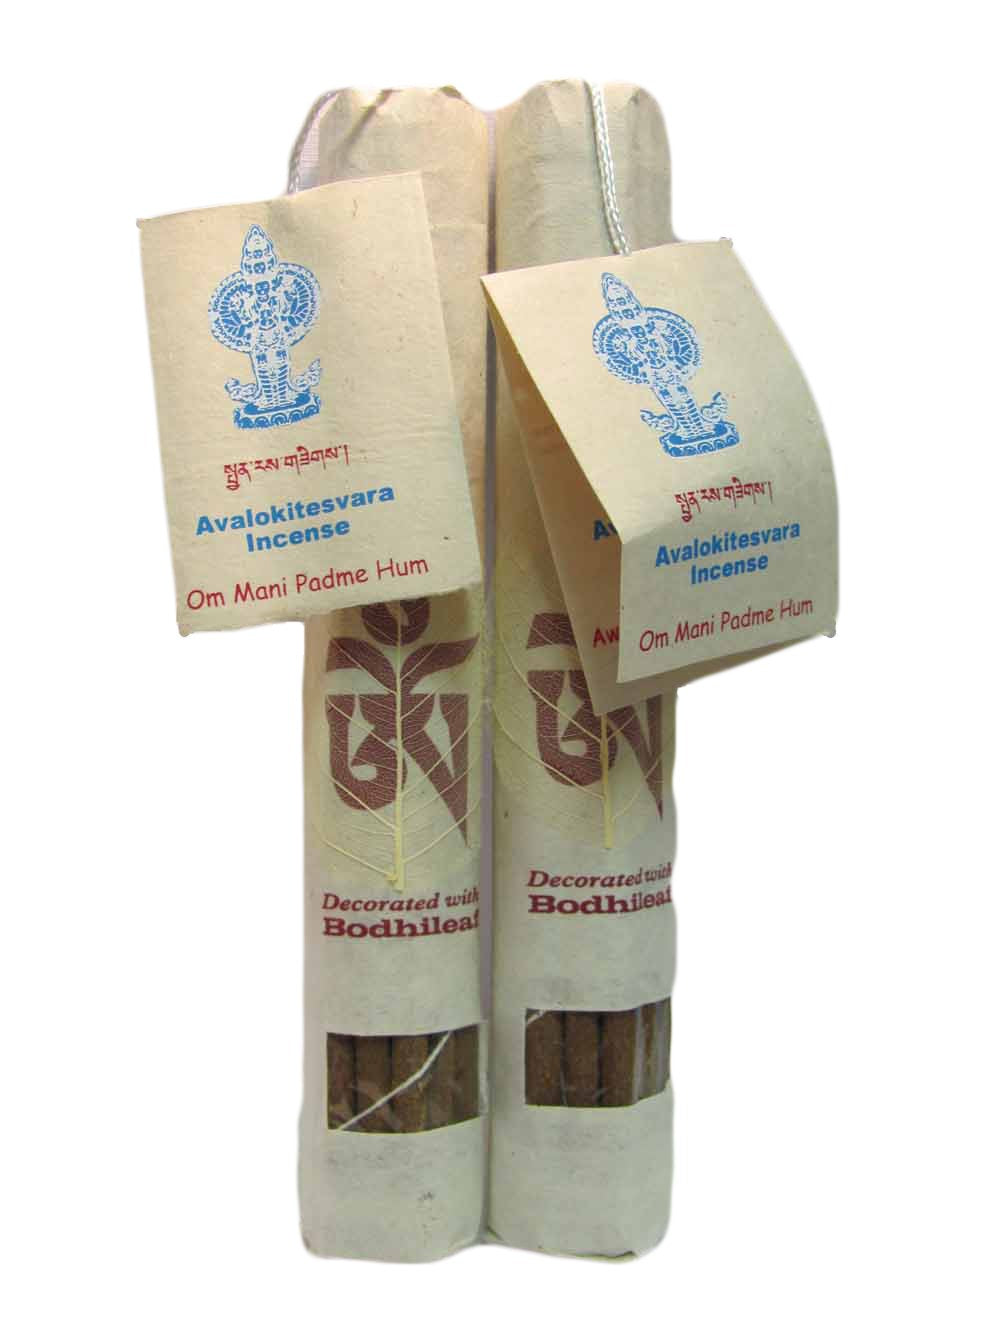 Traditional Tibetan Ayurveda Avalokitesvara Natural Incense Sticks (Om Mani Padme Hum) Pack of 2 - Ambali Fashion Incense aroma, aromatherapy, bohemian, eastern, ethnic, gypsy, healing, hippi